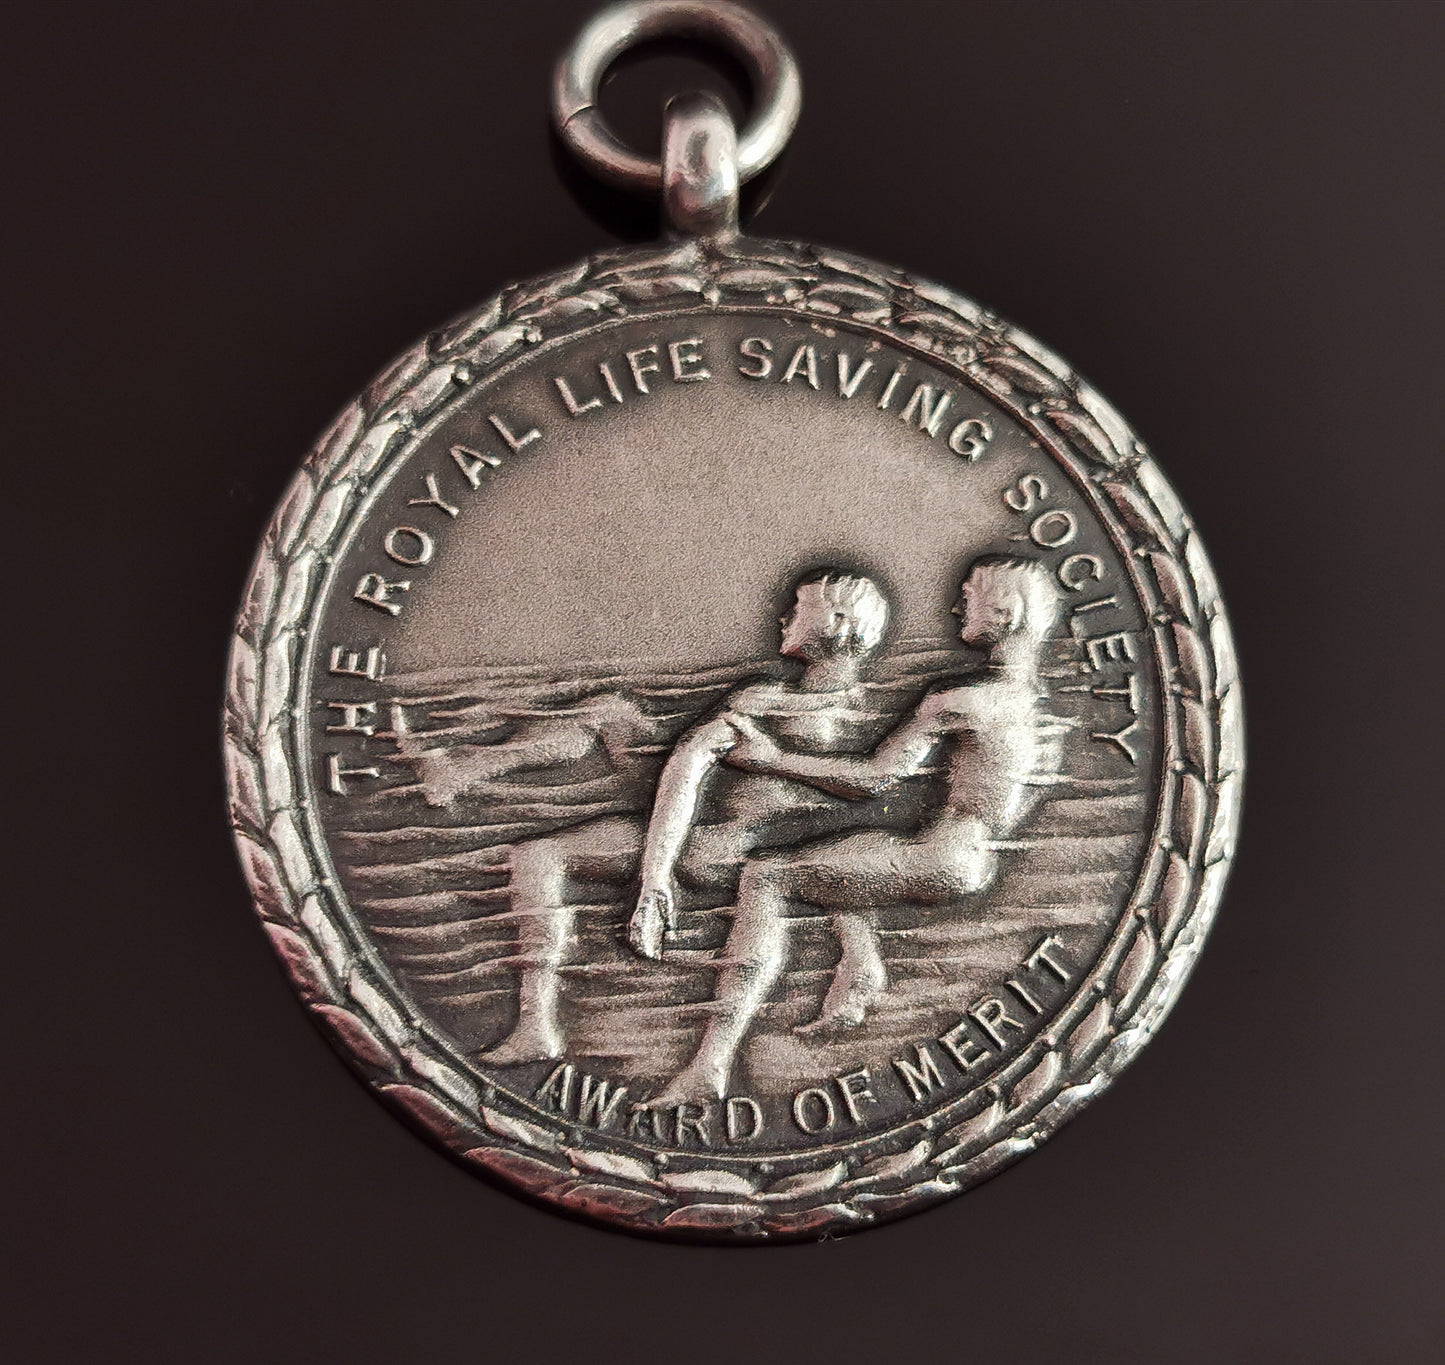 Vintage sterling silver watch fob pendant, medal, Lifesaving